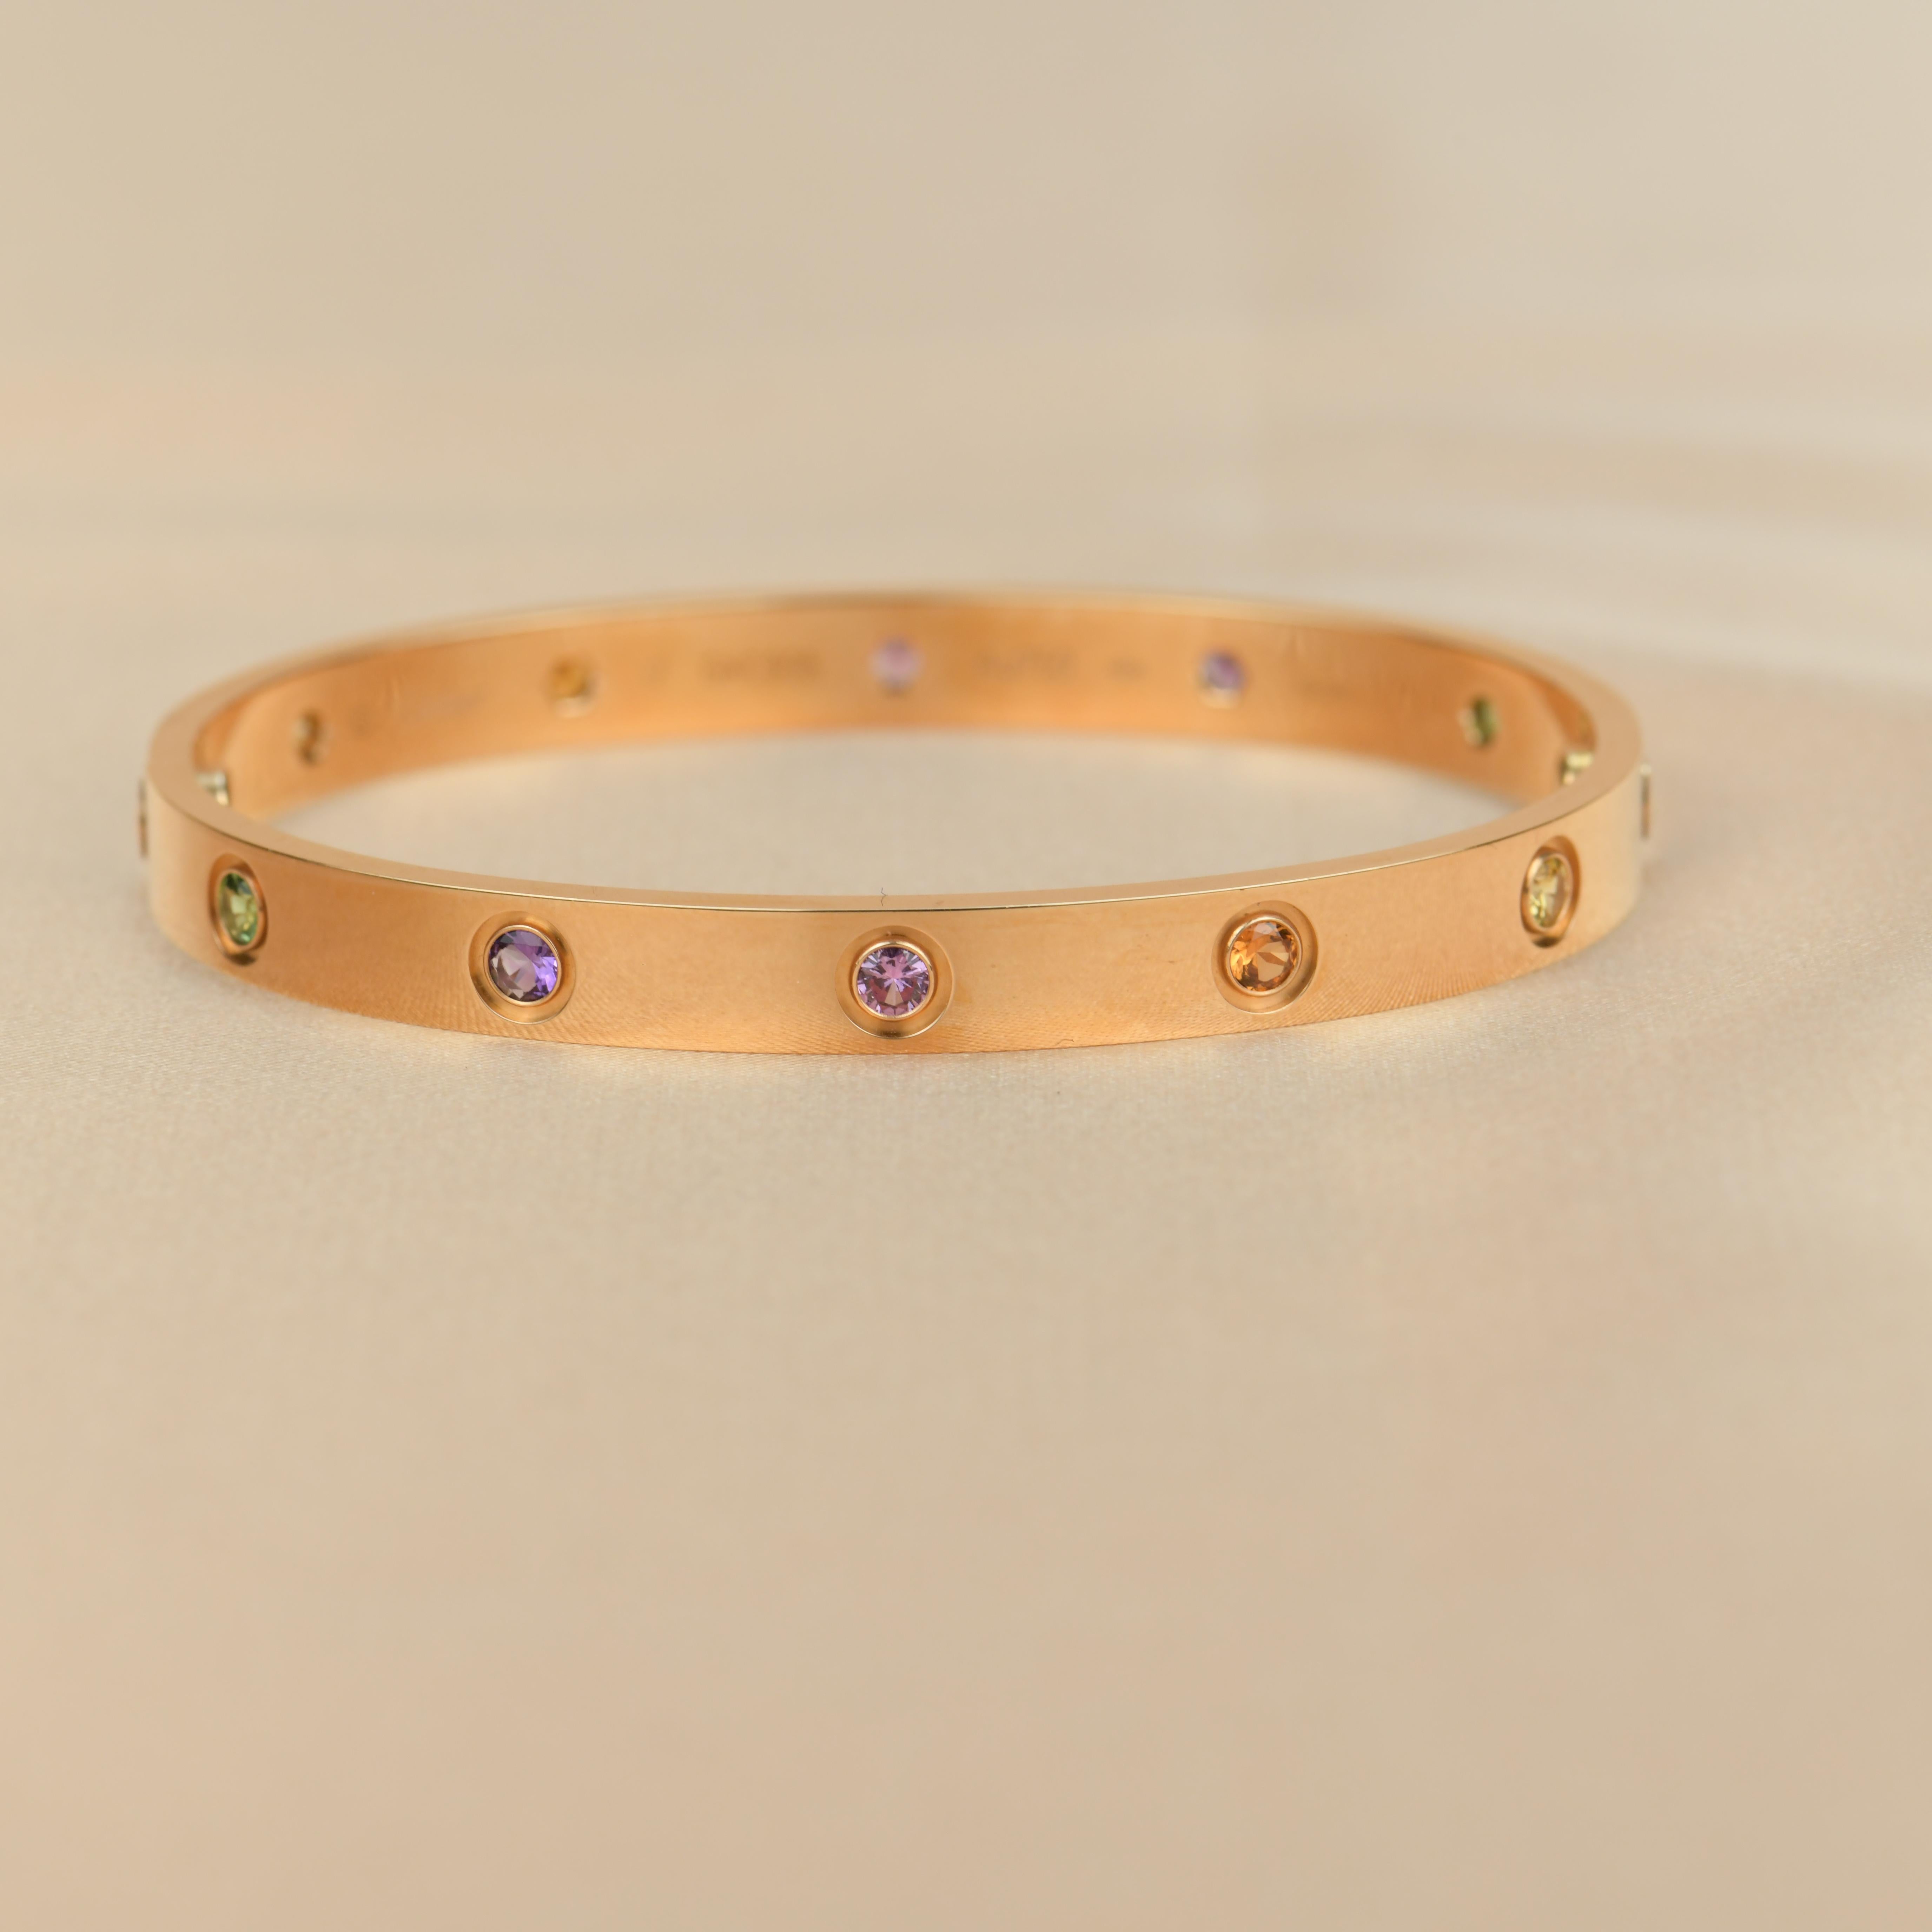 LOVE bracelet, 18K rose gold, set with 2 pink sapphires, 2 yellow sapphires, 2 green garnets, 2 orange garnets, and 2 amethysts. 
_____________________________________________________________
Dandelion Antiques Code AT-1225
Brand Cartier
Model